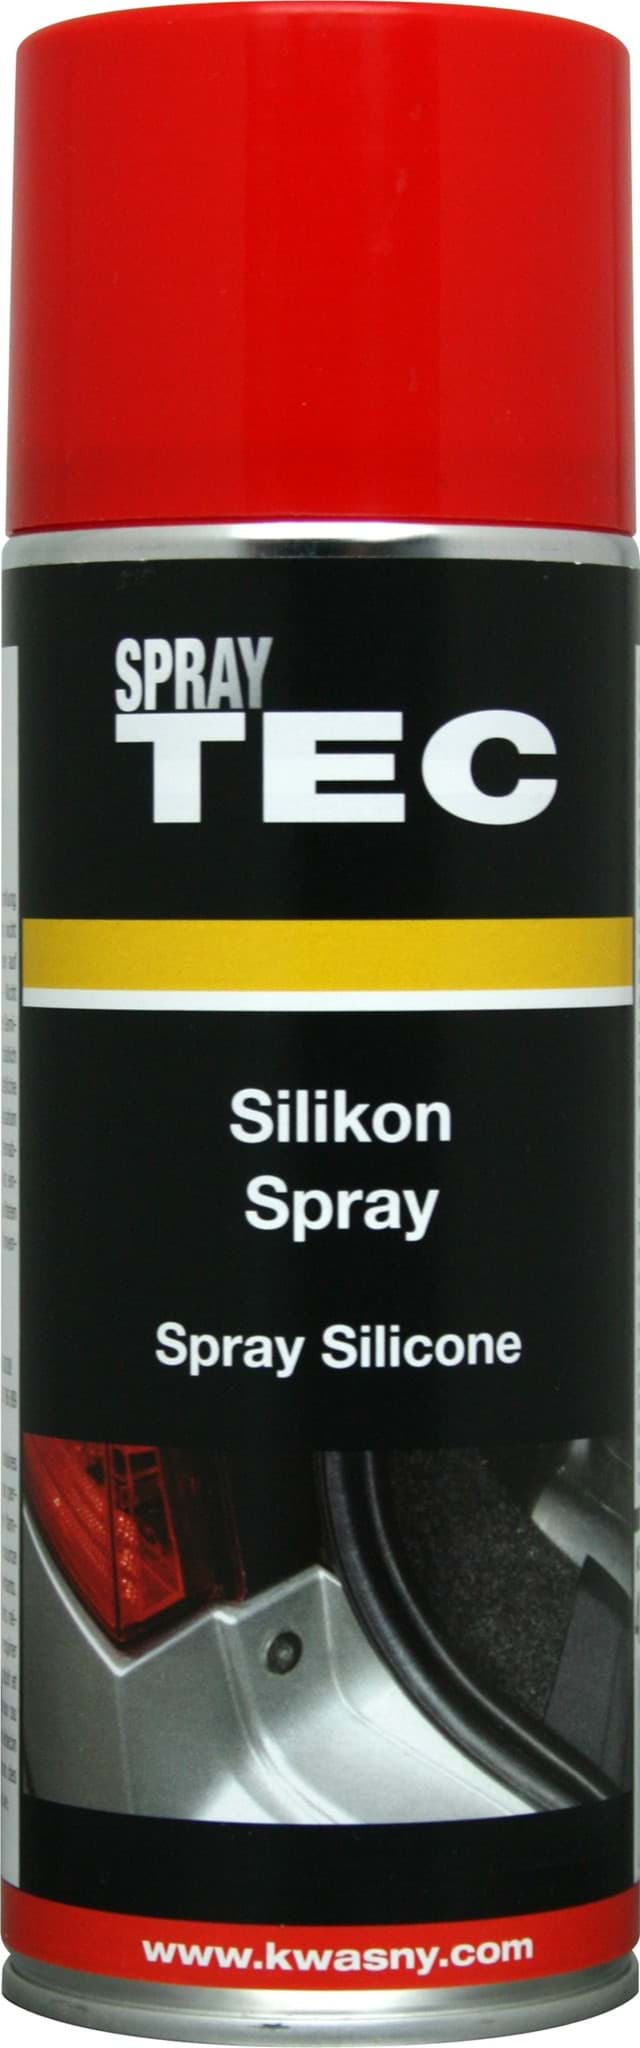 Silikon-Spray 400ml SprayTEC 235001 resmi